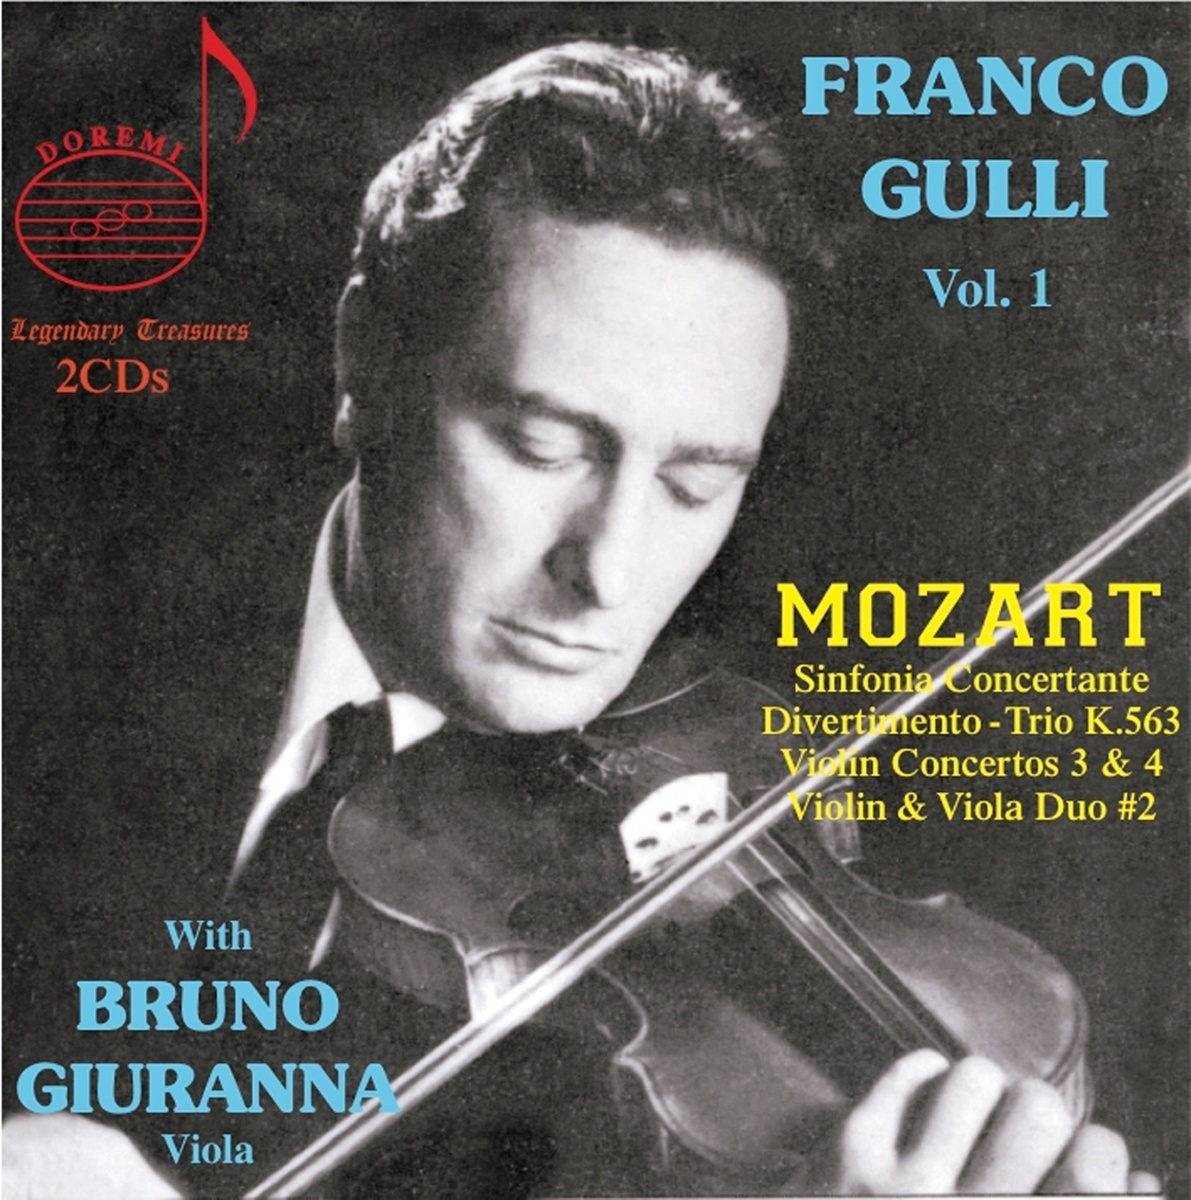 Franco Gulli Vol.1 - Franco Gulli  Bruno Giuranna  Alceo Galliera. (CD)